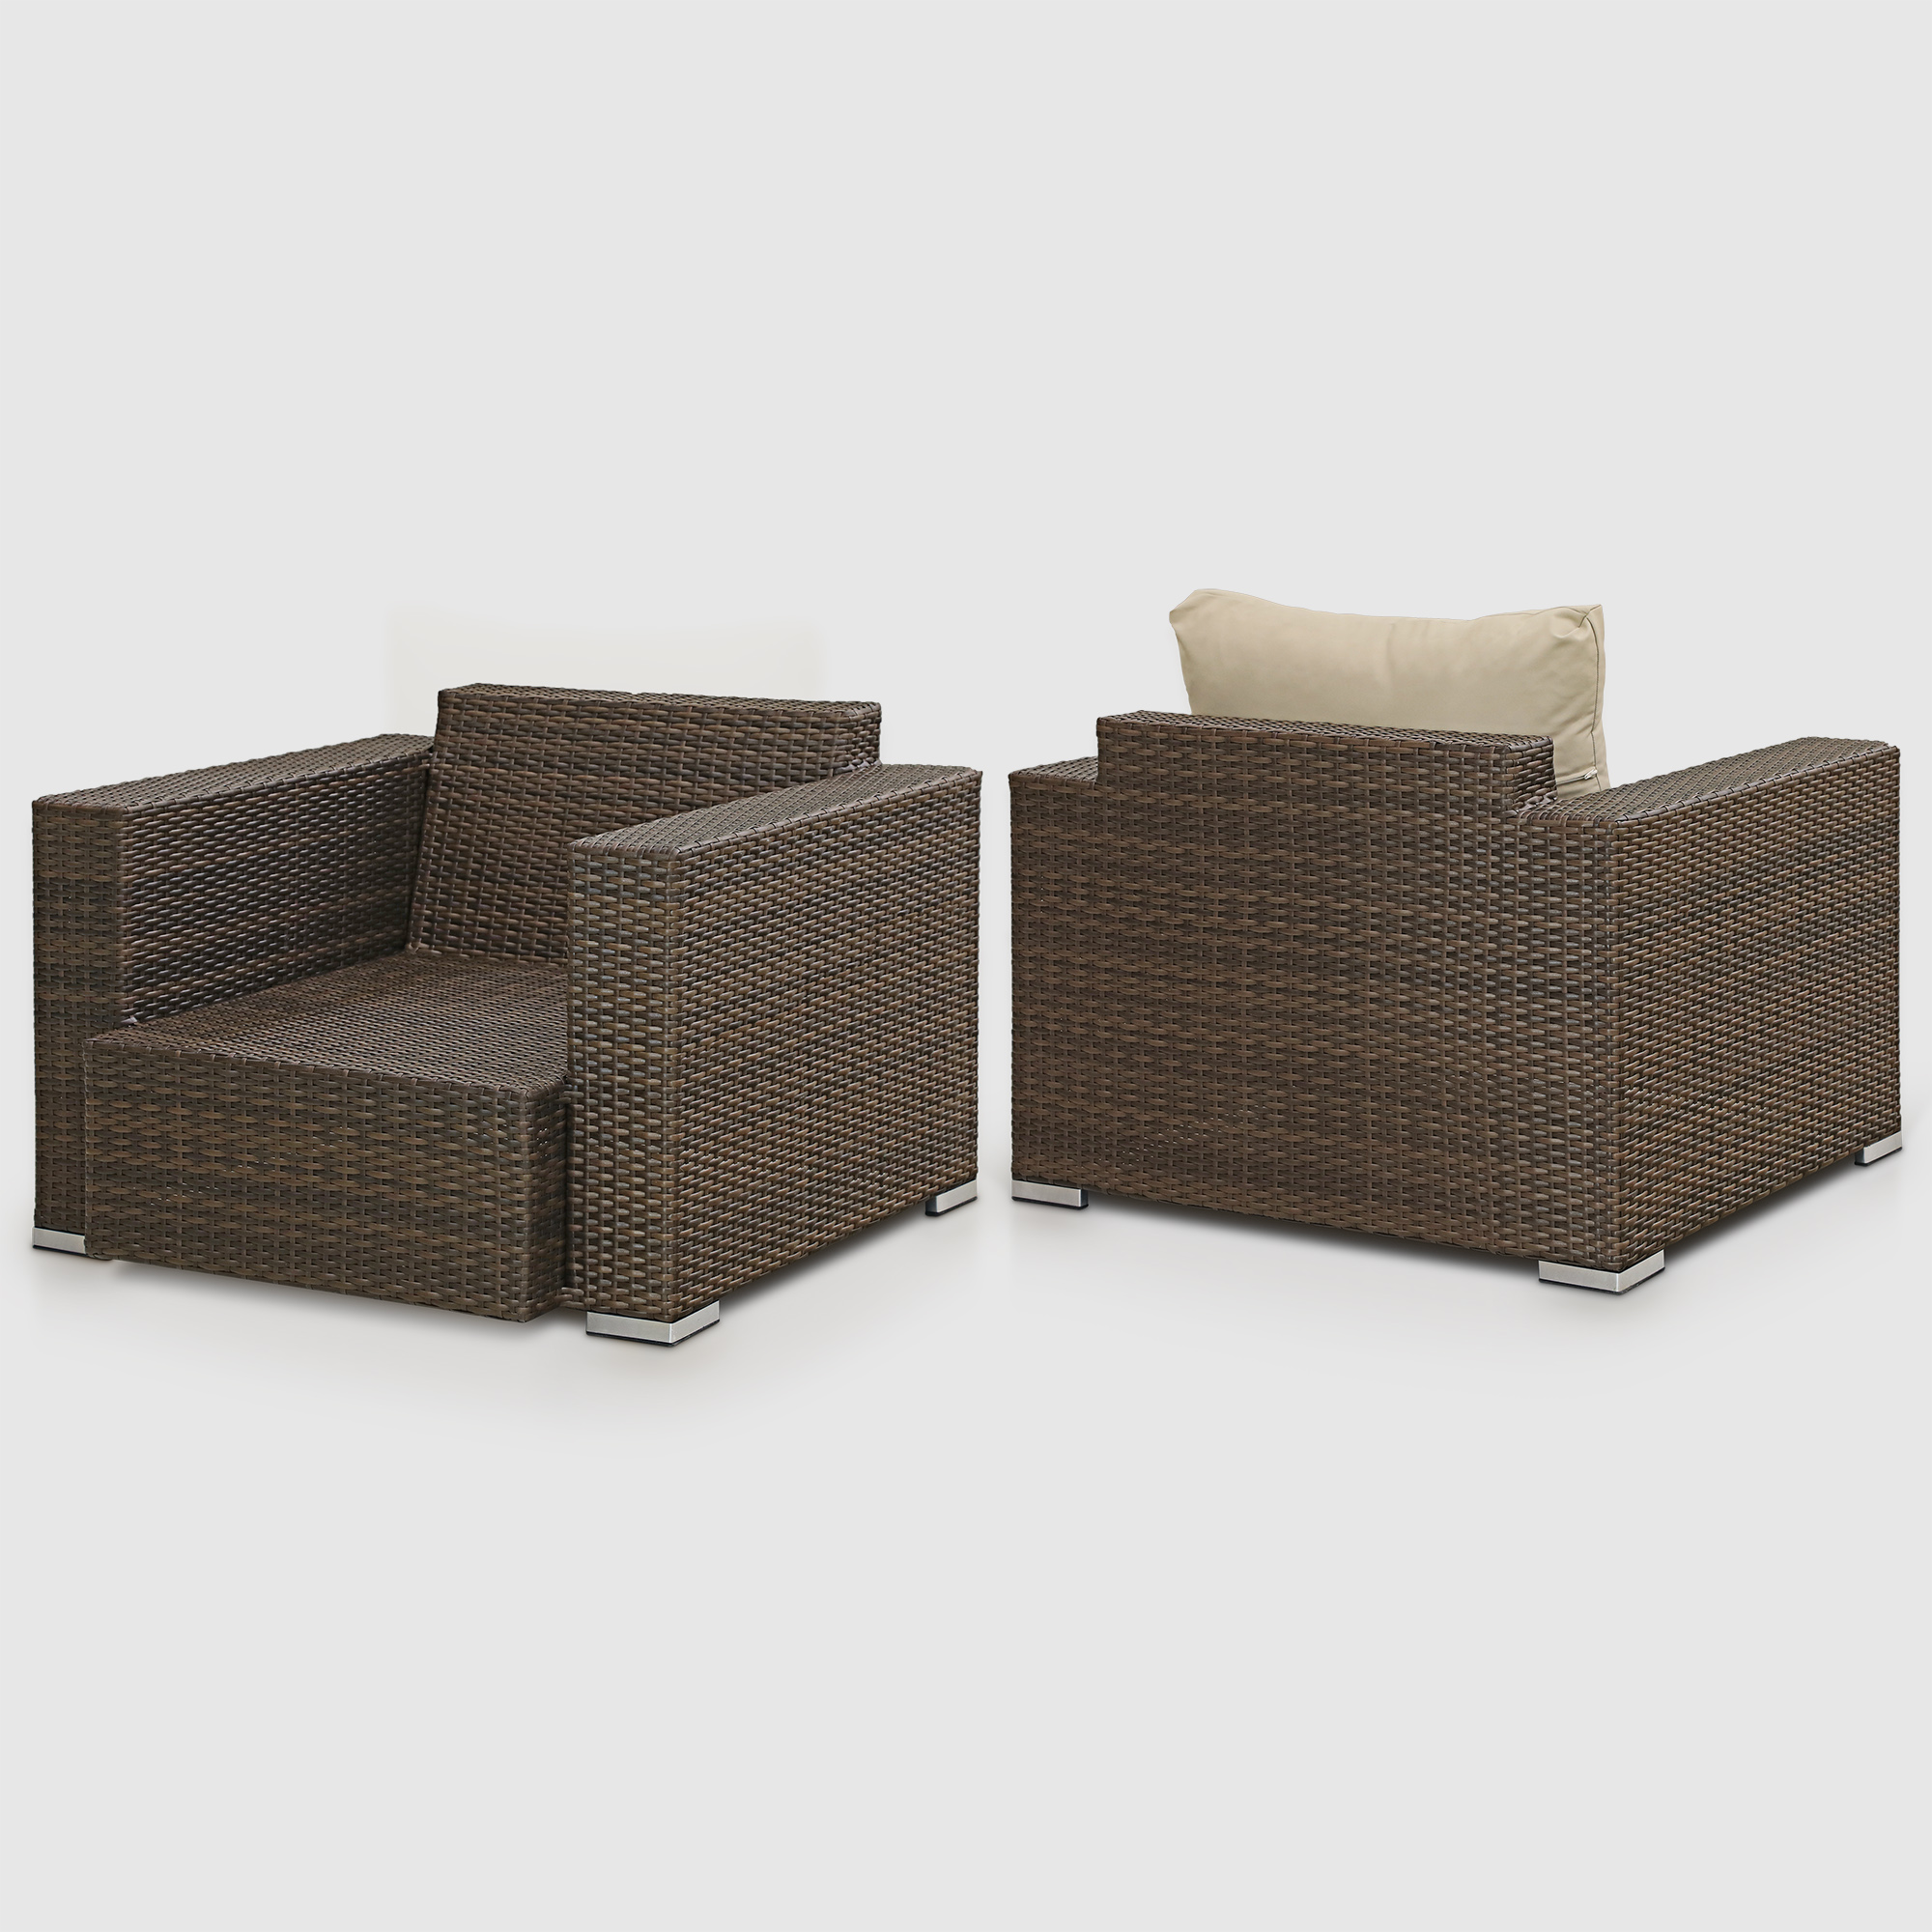 Комплект мебели Ns Rattan Cleo коричневый с бежевым 7 предметов, цвет бежевый, размер 224х88х70 - фото 5